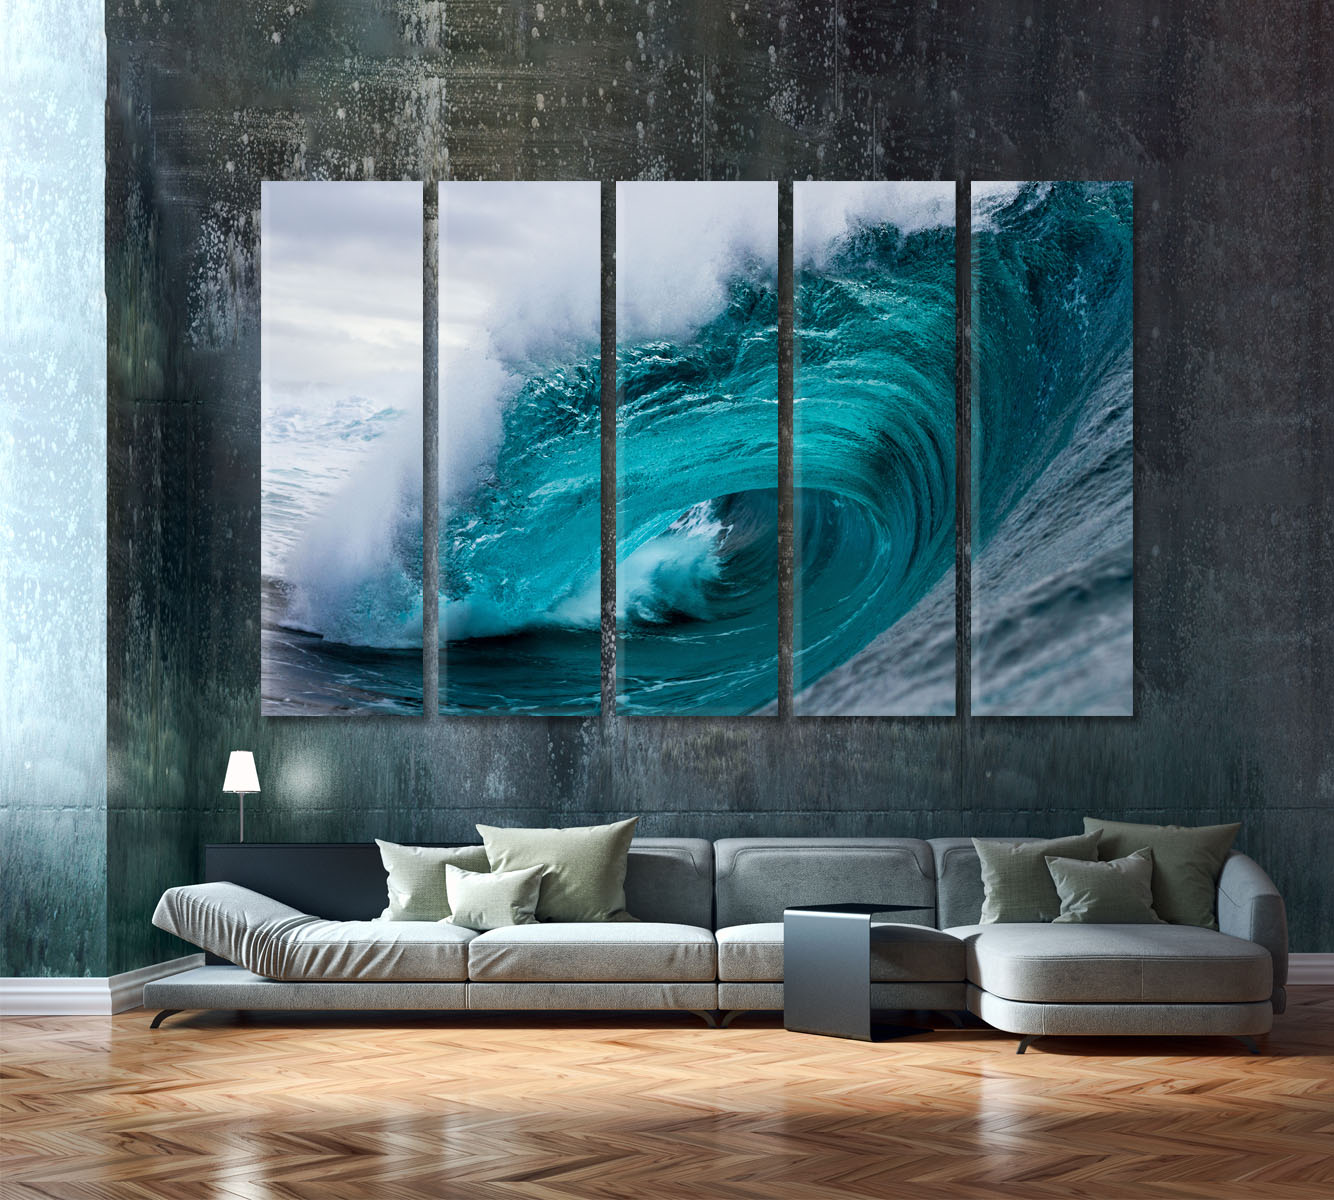 Big Blue Crashing Wave Scenic Impressive Photo Nautical, Sea Life Pattern Art Artesty 5 panels 36" x 24" 